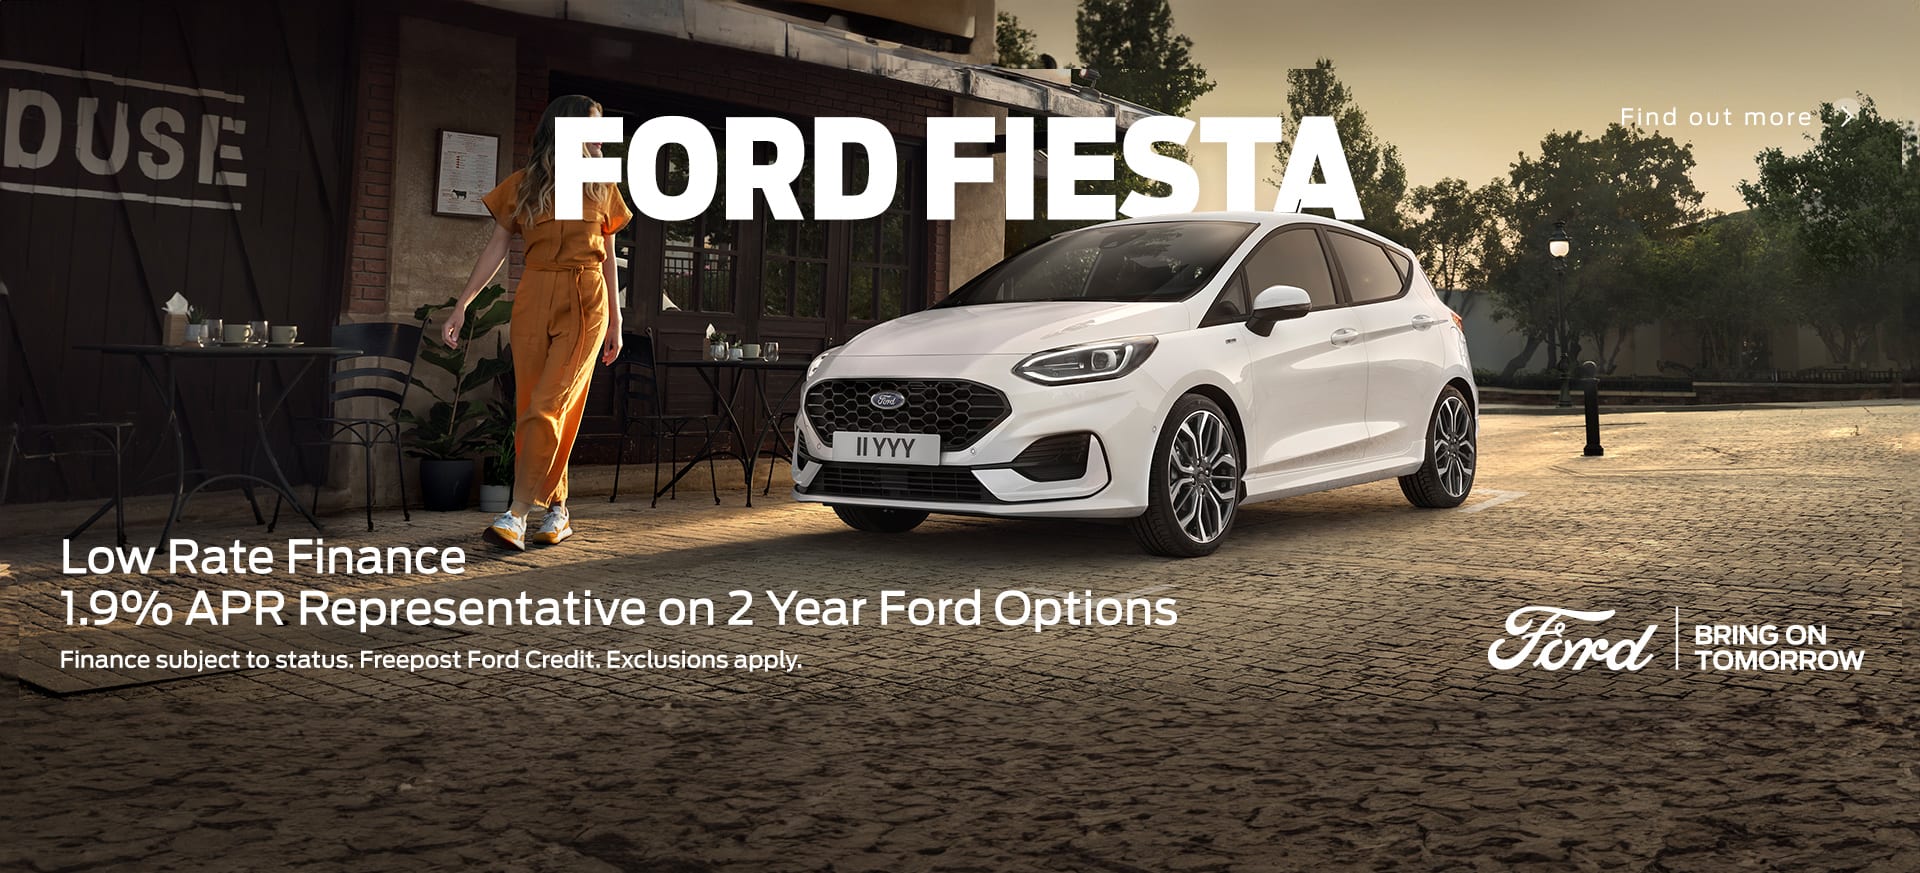 Ford Fiesta 1.9%